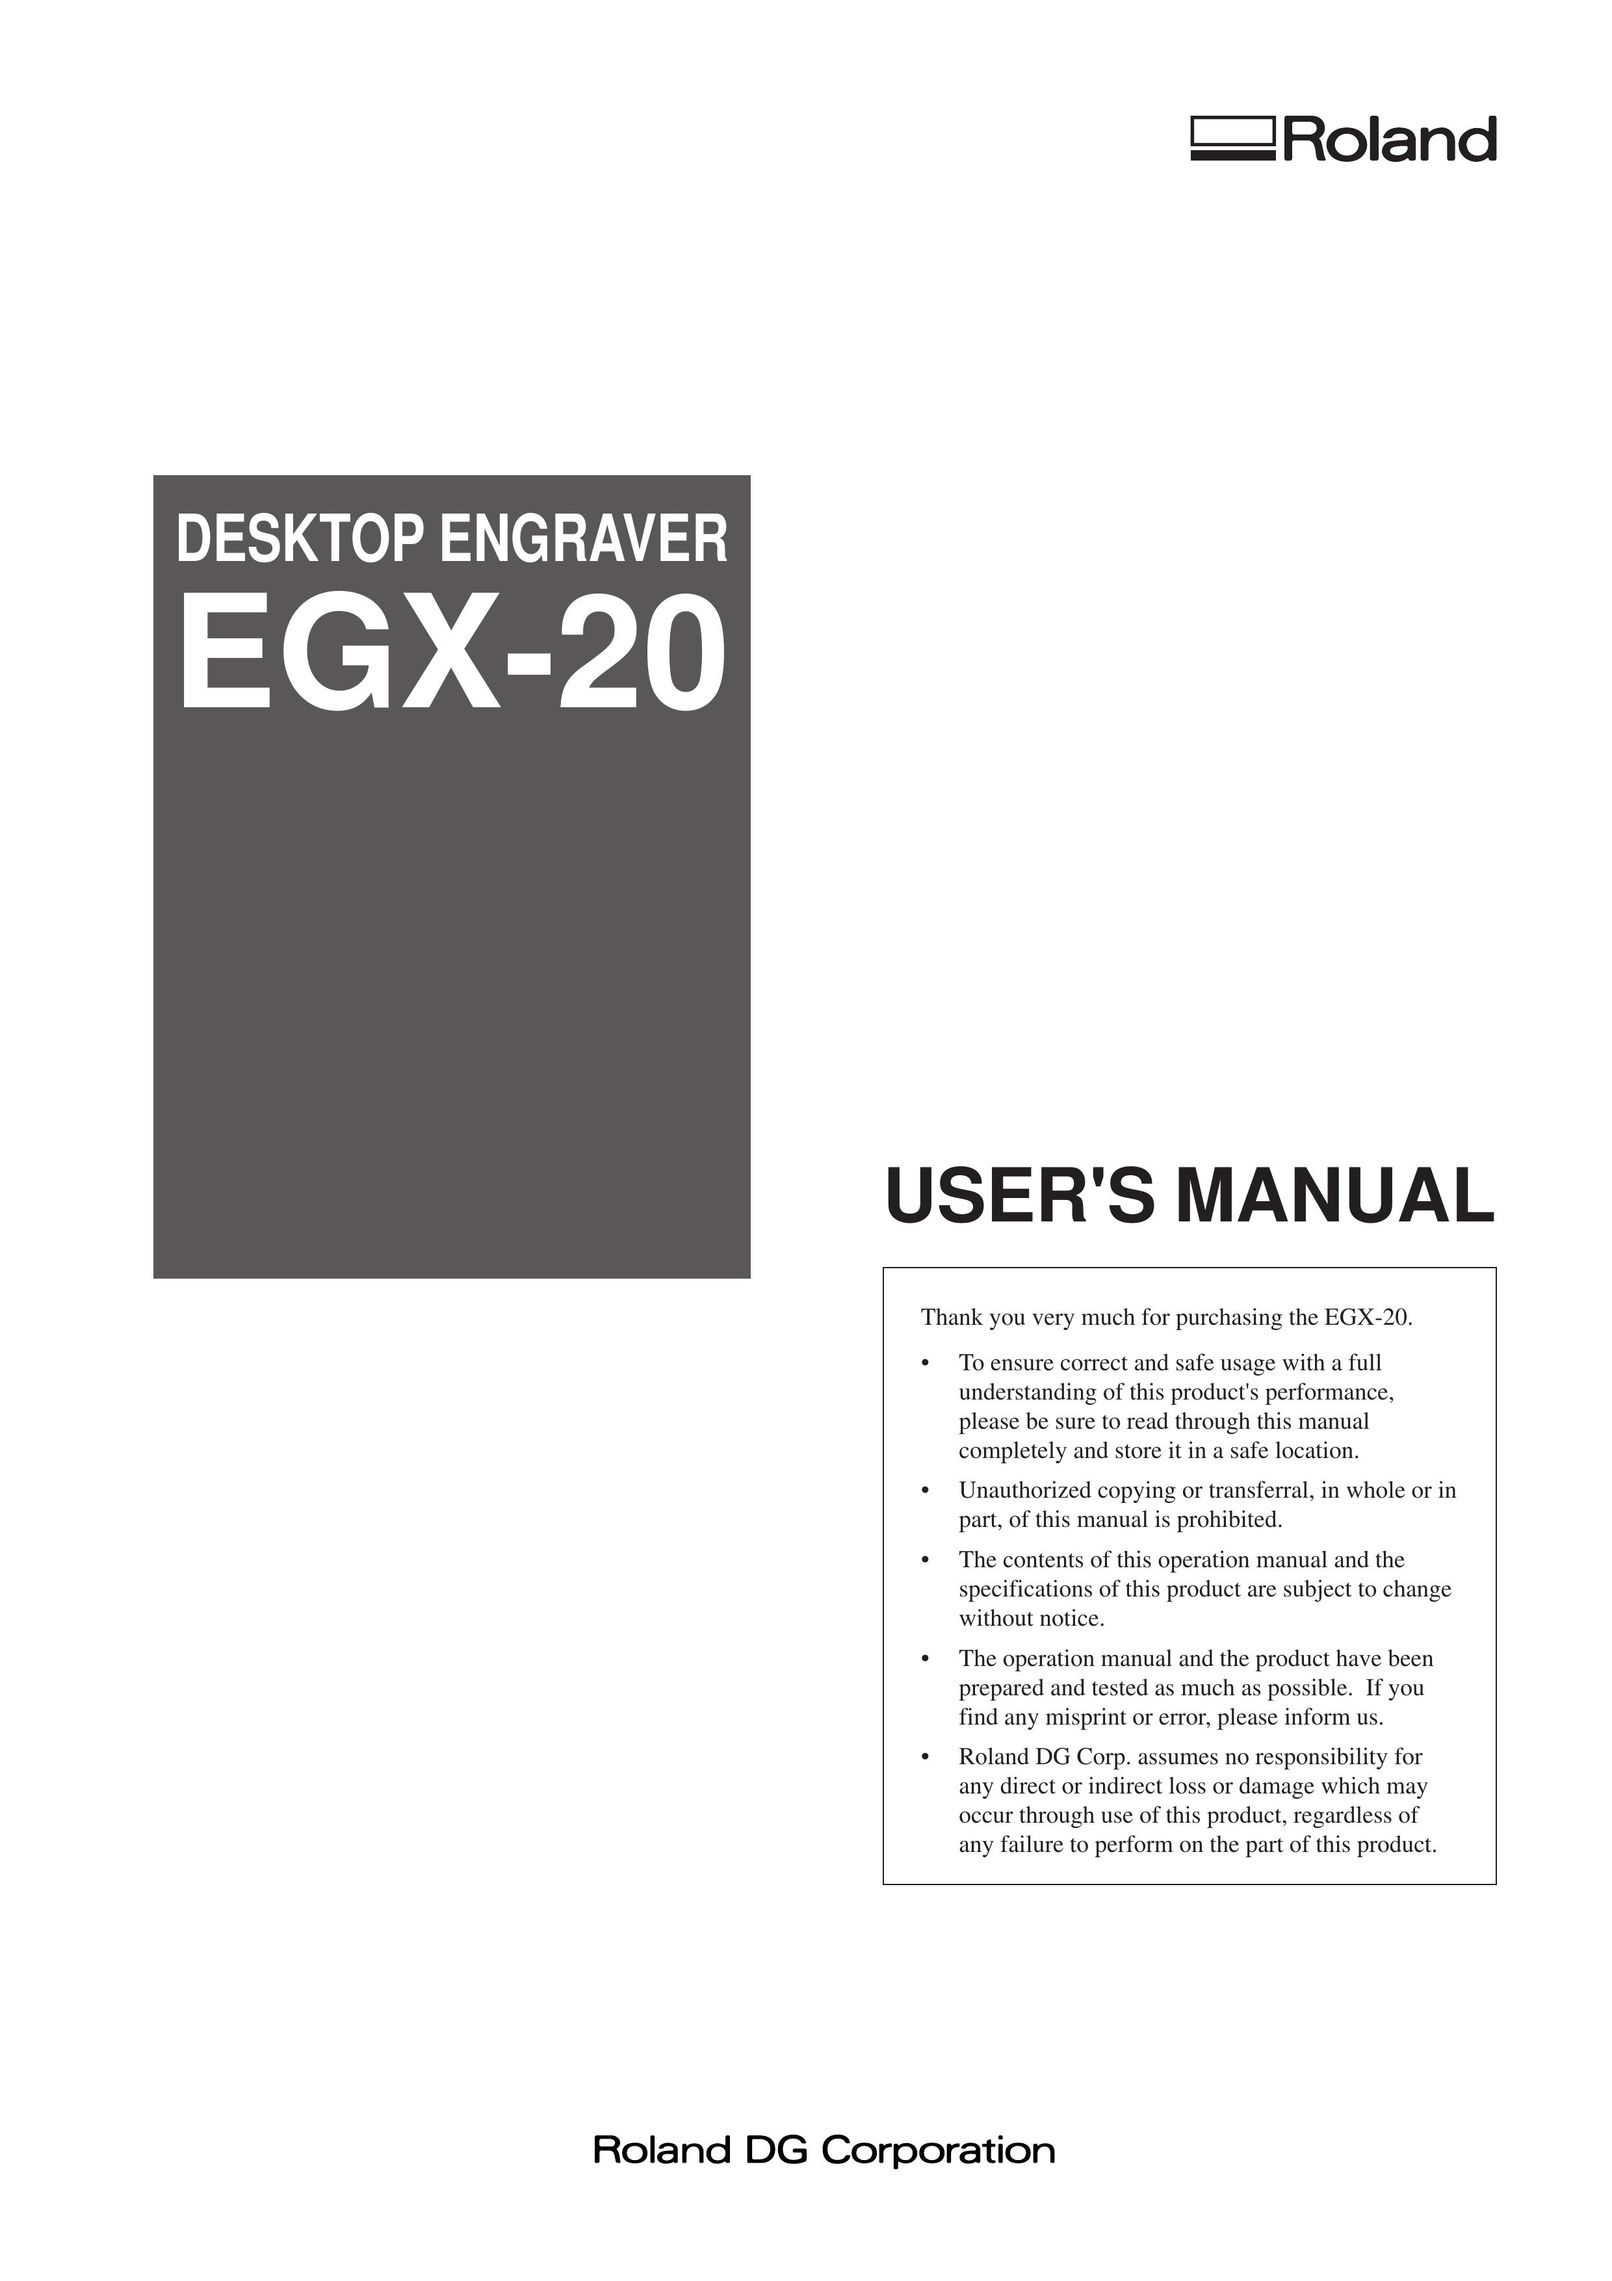 Roland EGX-20 Engraver User Manual